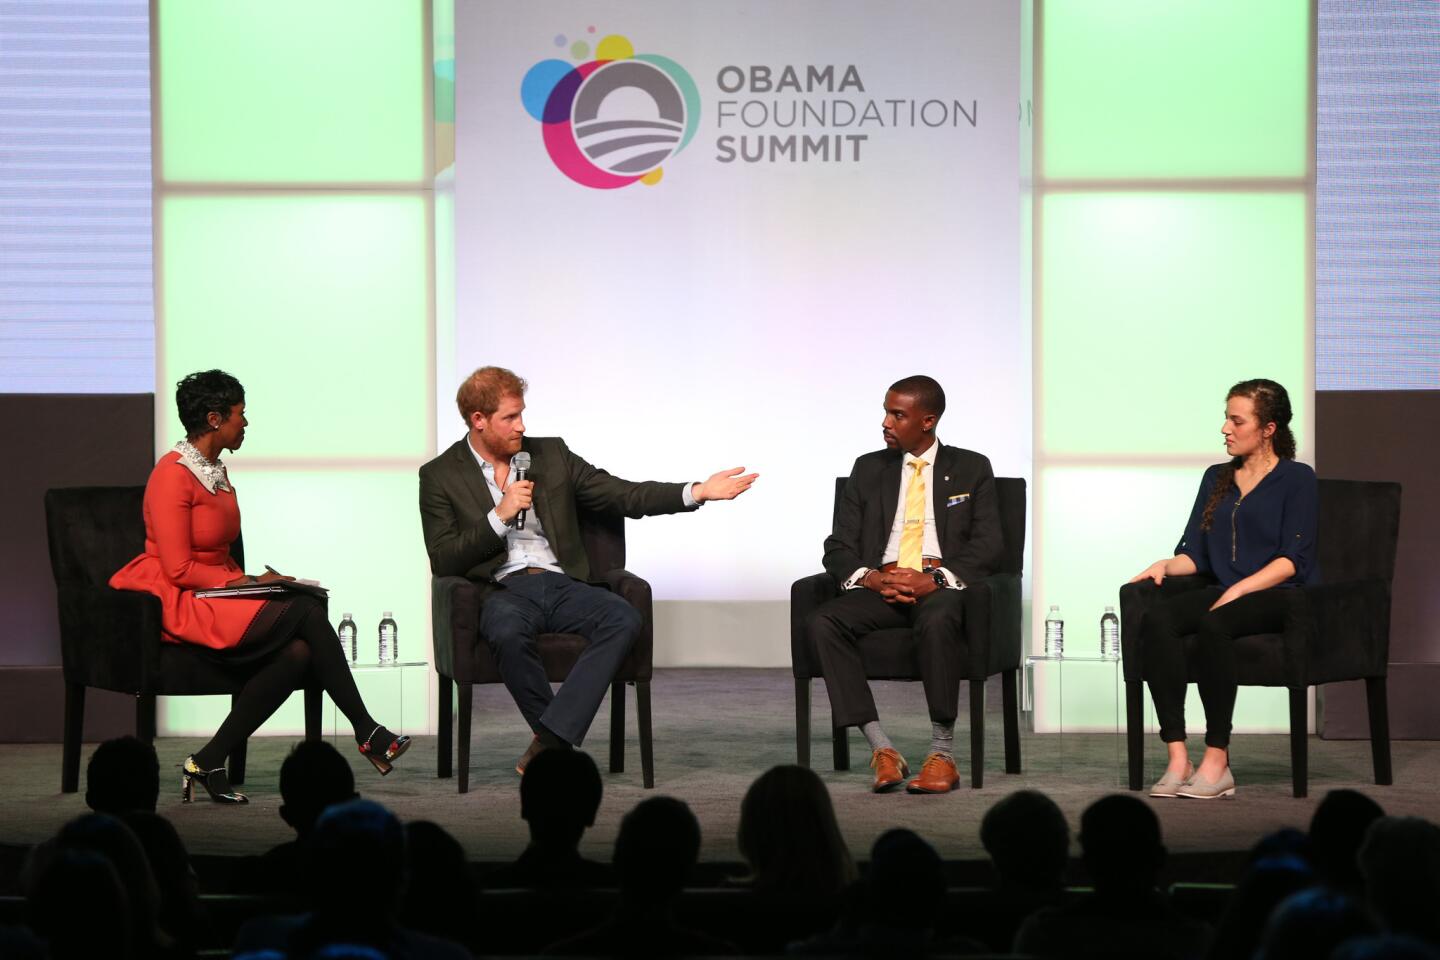 Obama Foundation Summit